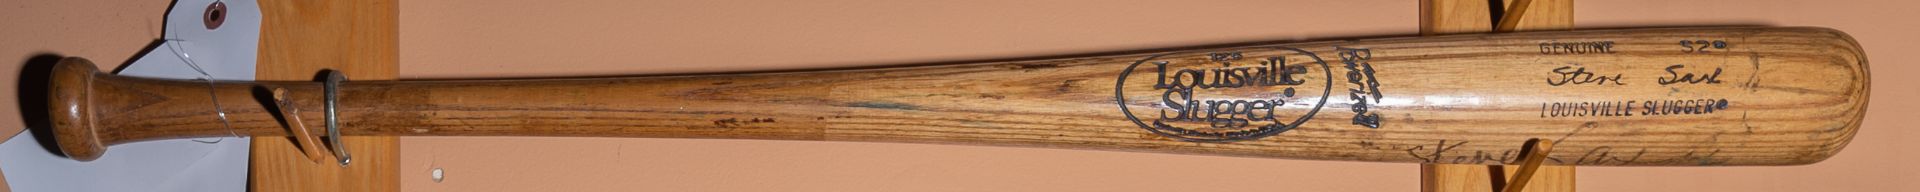 Autographed Louisville Slugger Wood Baseball Bat Stamped and Signed "Steve Sax"